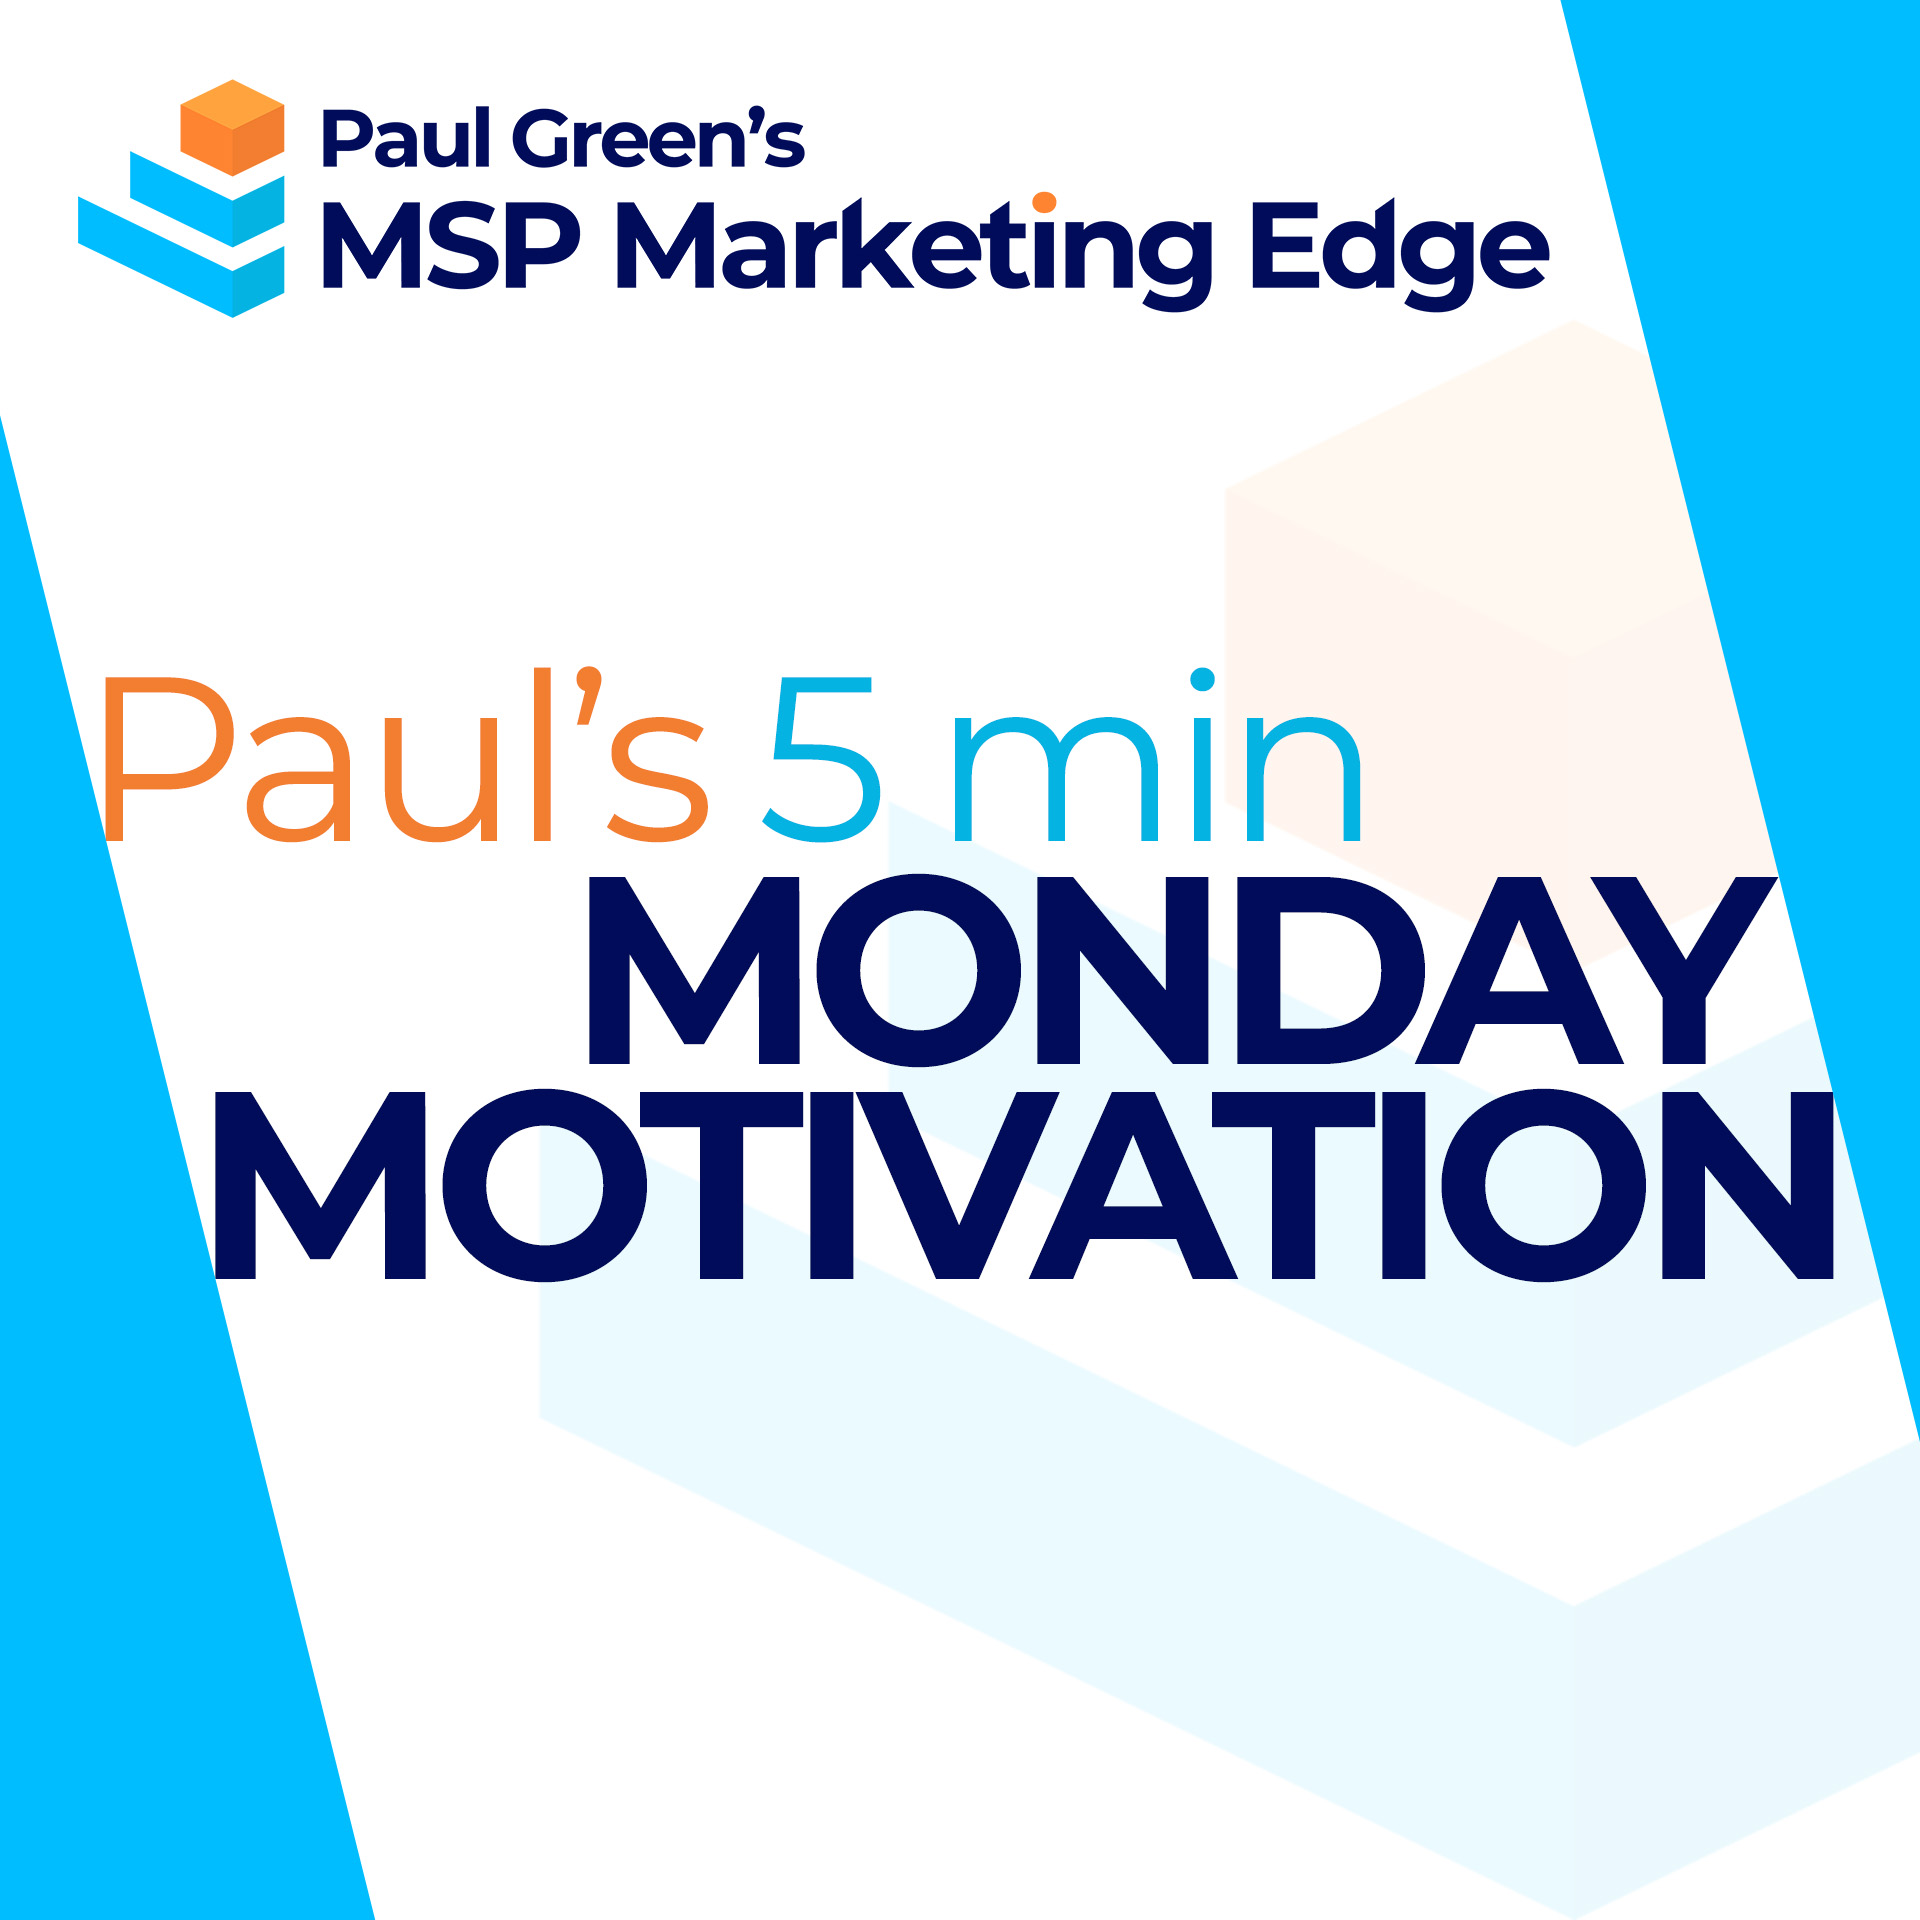 Paul Green's 5 min Monday Motivation